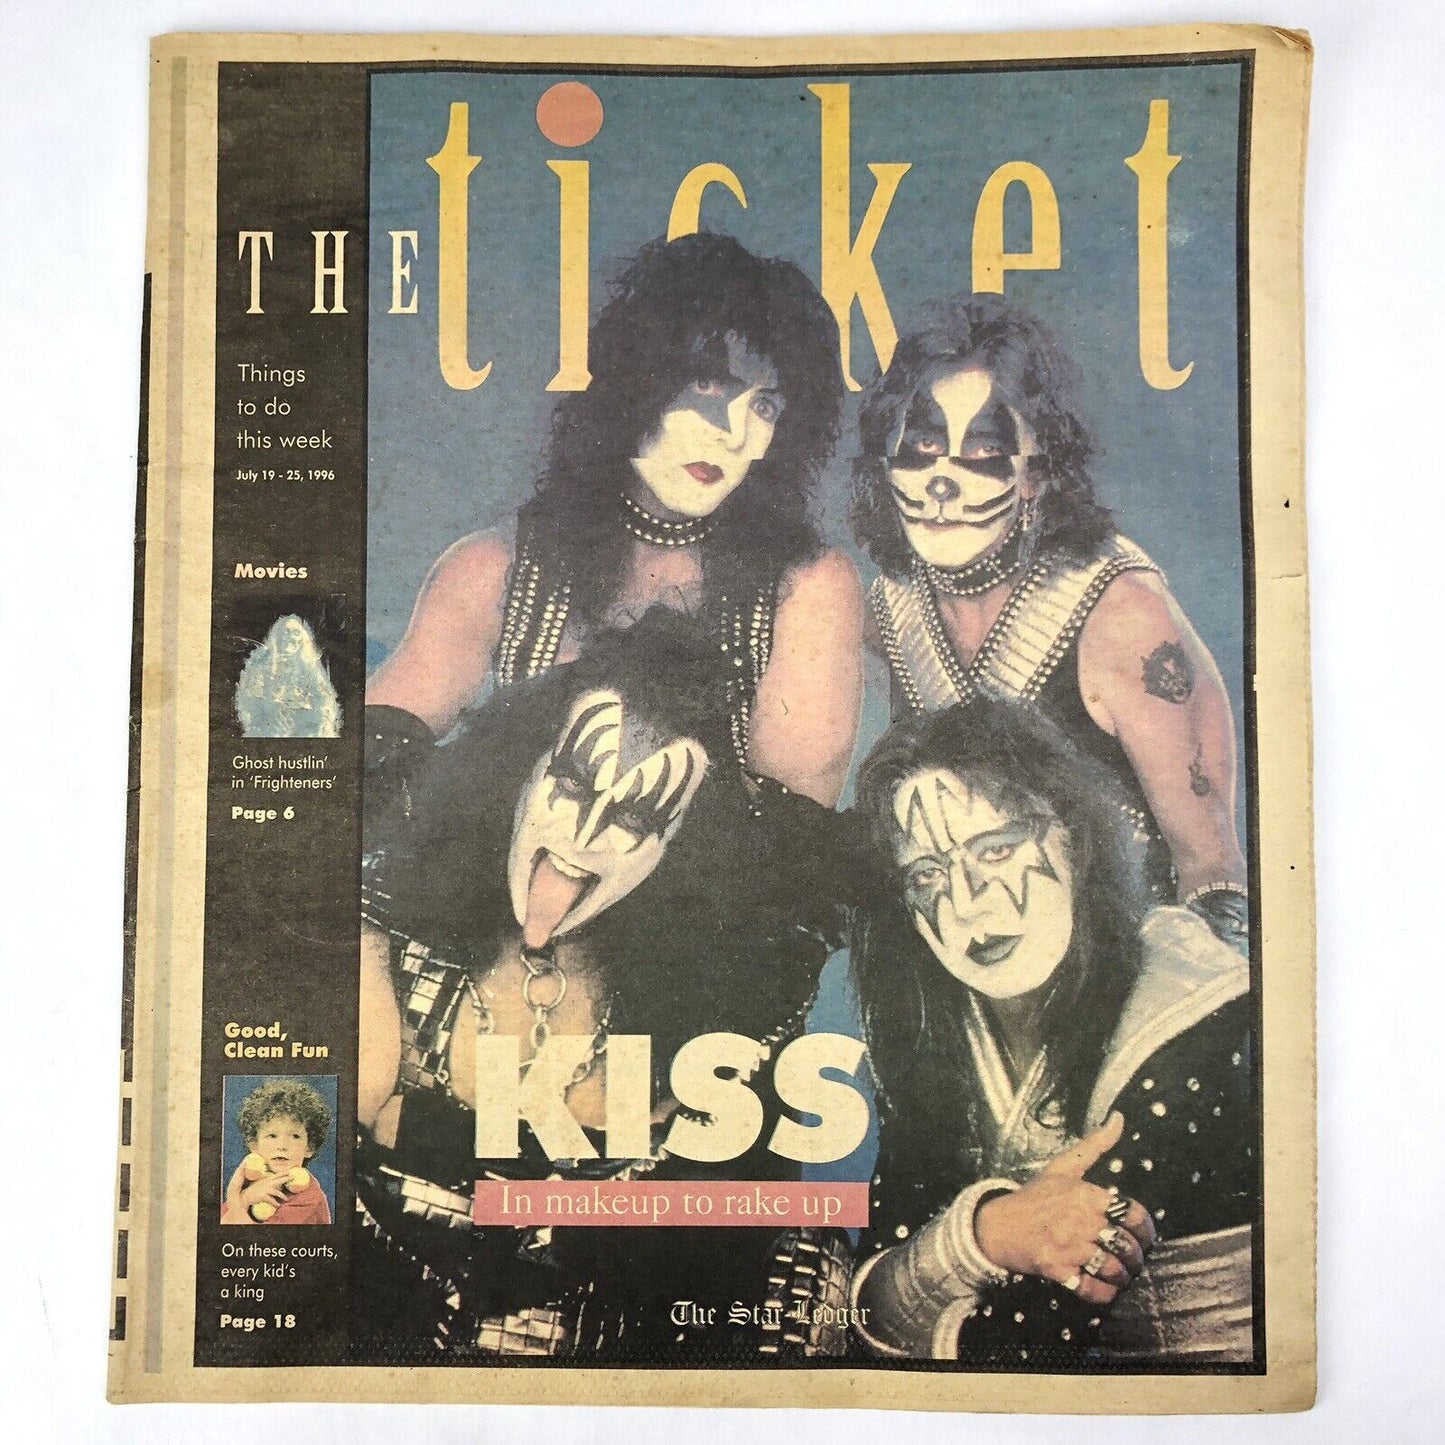 KISS 1996 COVER & ARTICLE Newspaper Oversize  Magazine THE TICKET Star Ledger NJ